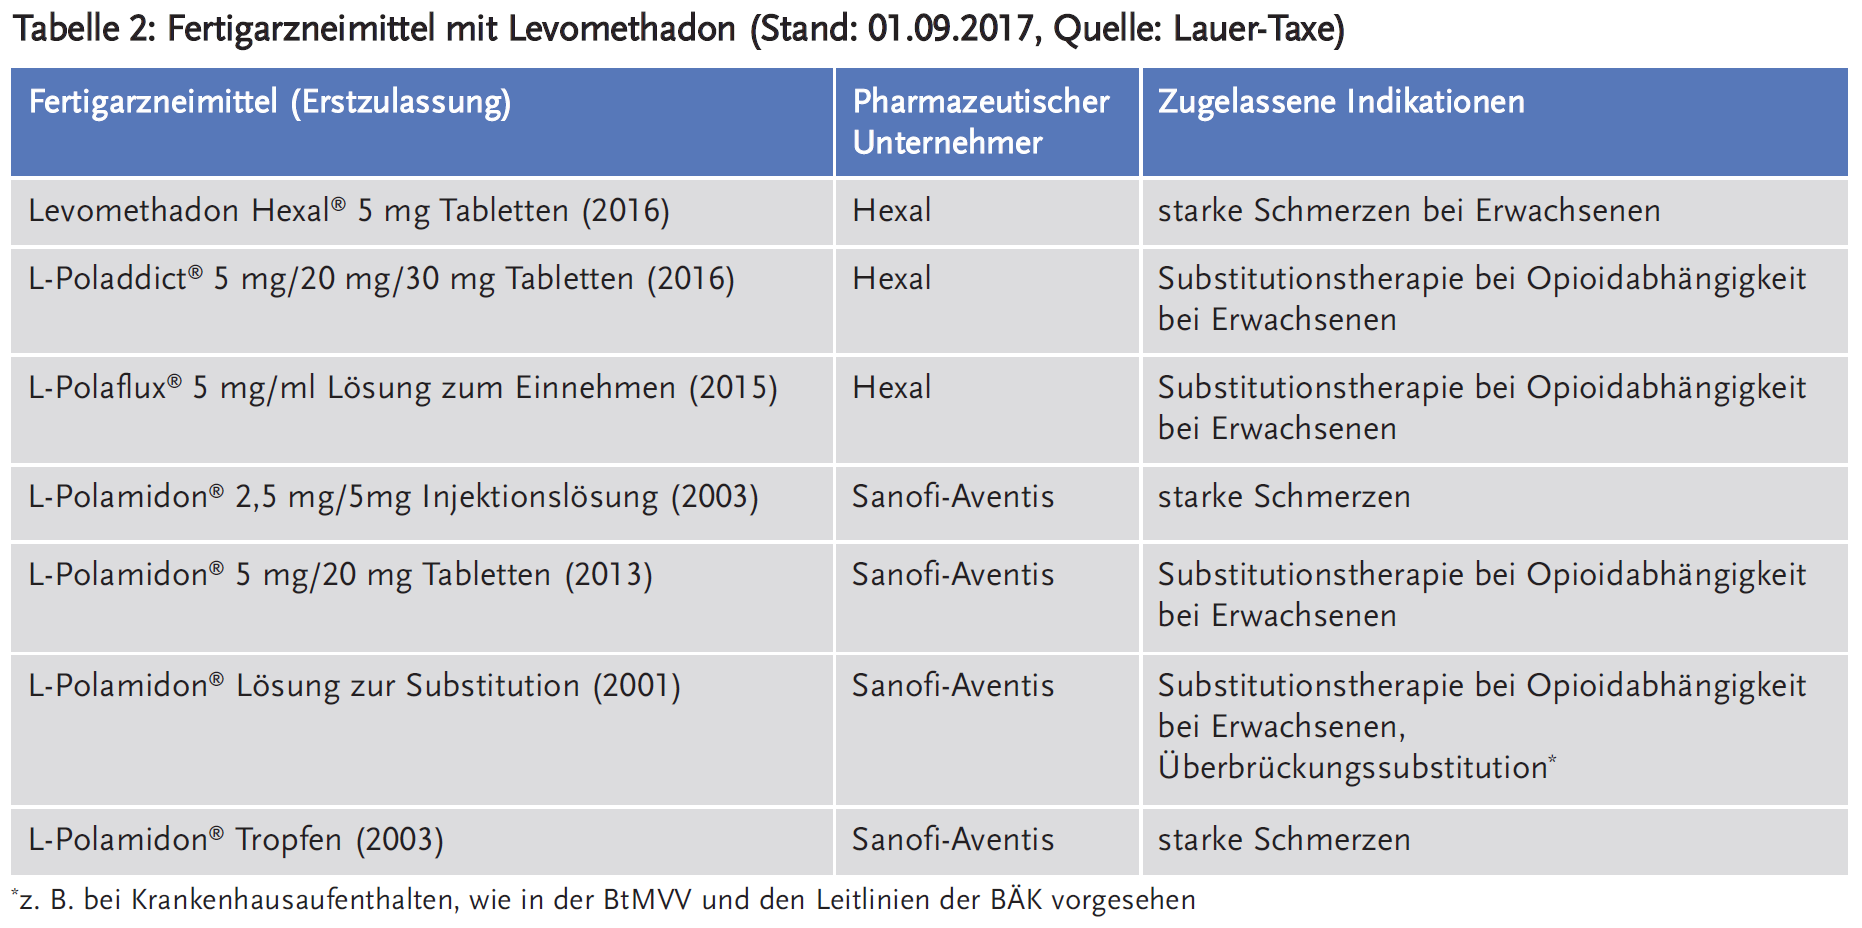 Tabelle 2: Fertigarzneimittel mit Levomethadon (Stand: 01.09.2017, Quelle: Lauer-Taxe)